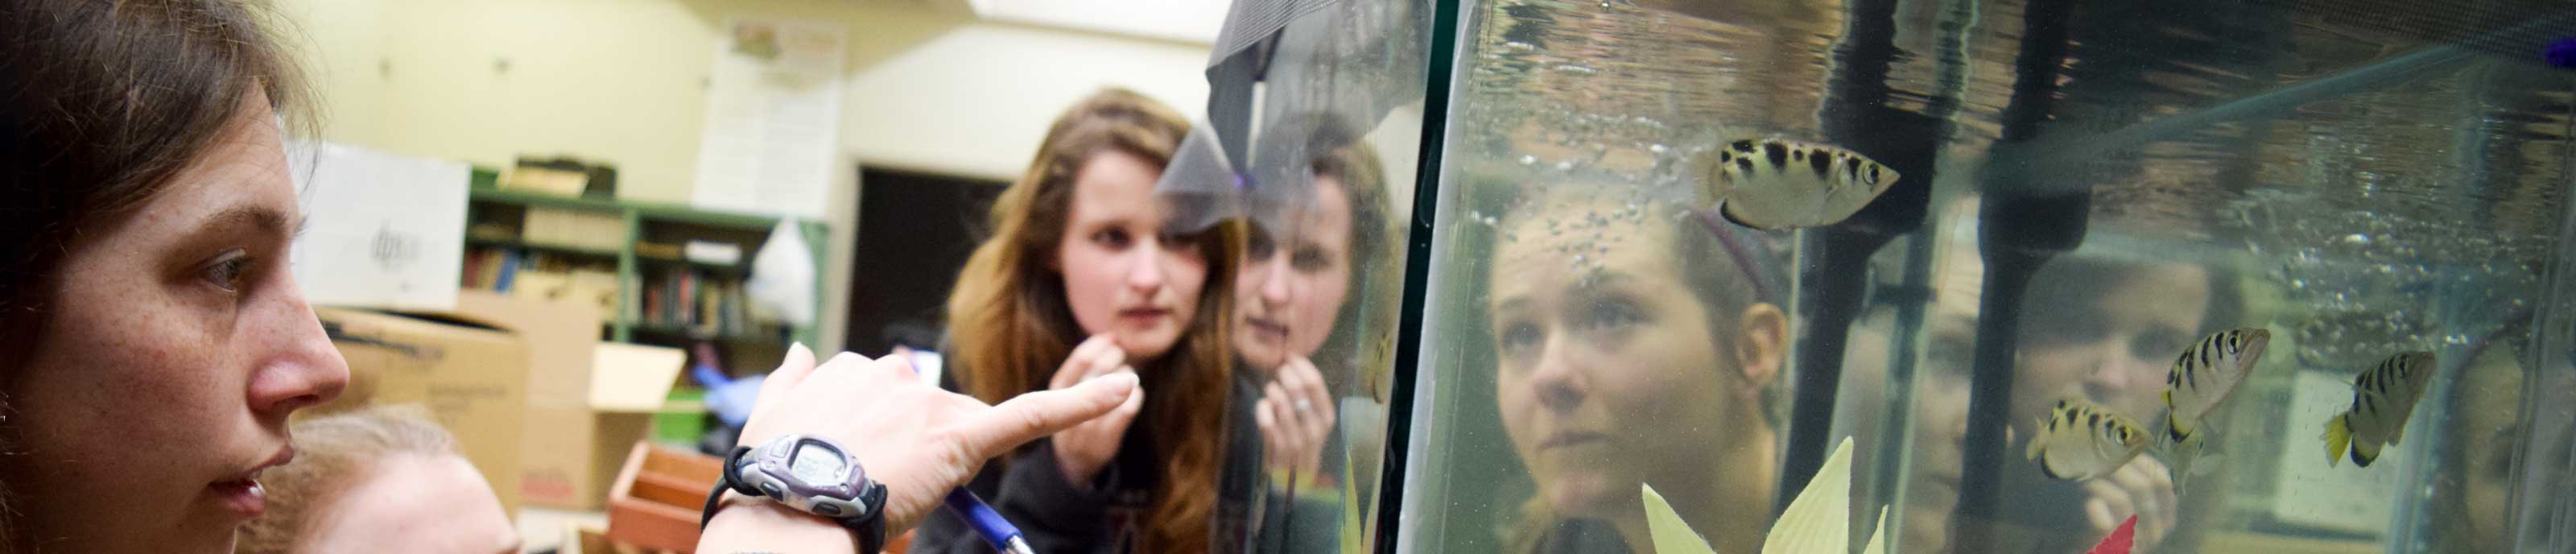 Biology students examine fish in an aquarium